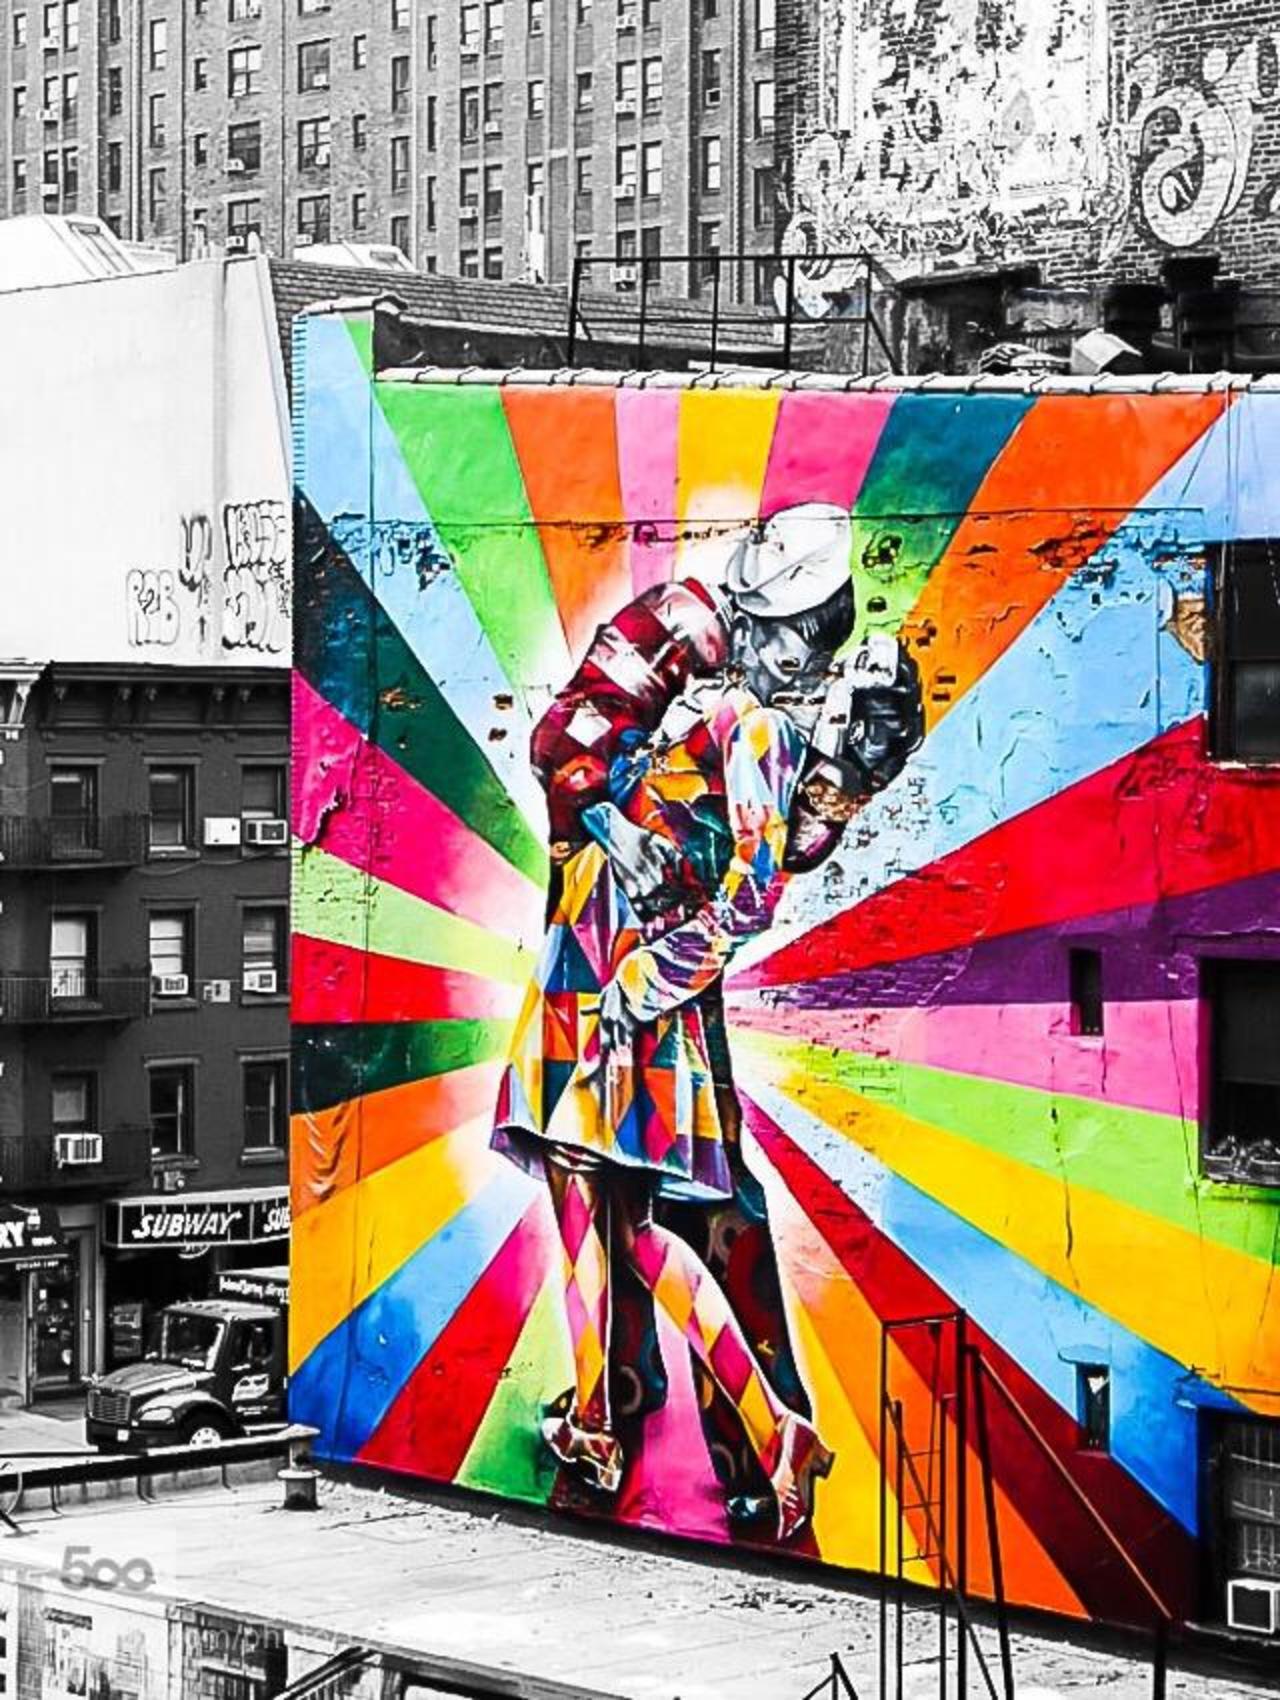 RT @CoverGap: New York City by ... - http://www.covergap.com/new-york-city-by-jtfontaine97-2/ #Beautiful #Graffiti #NewYork #SelectiveColoring #StreetArt http://t.co/0IXAv9X70F